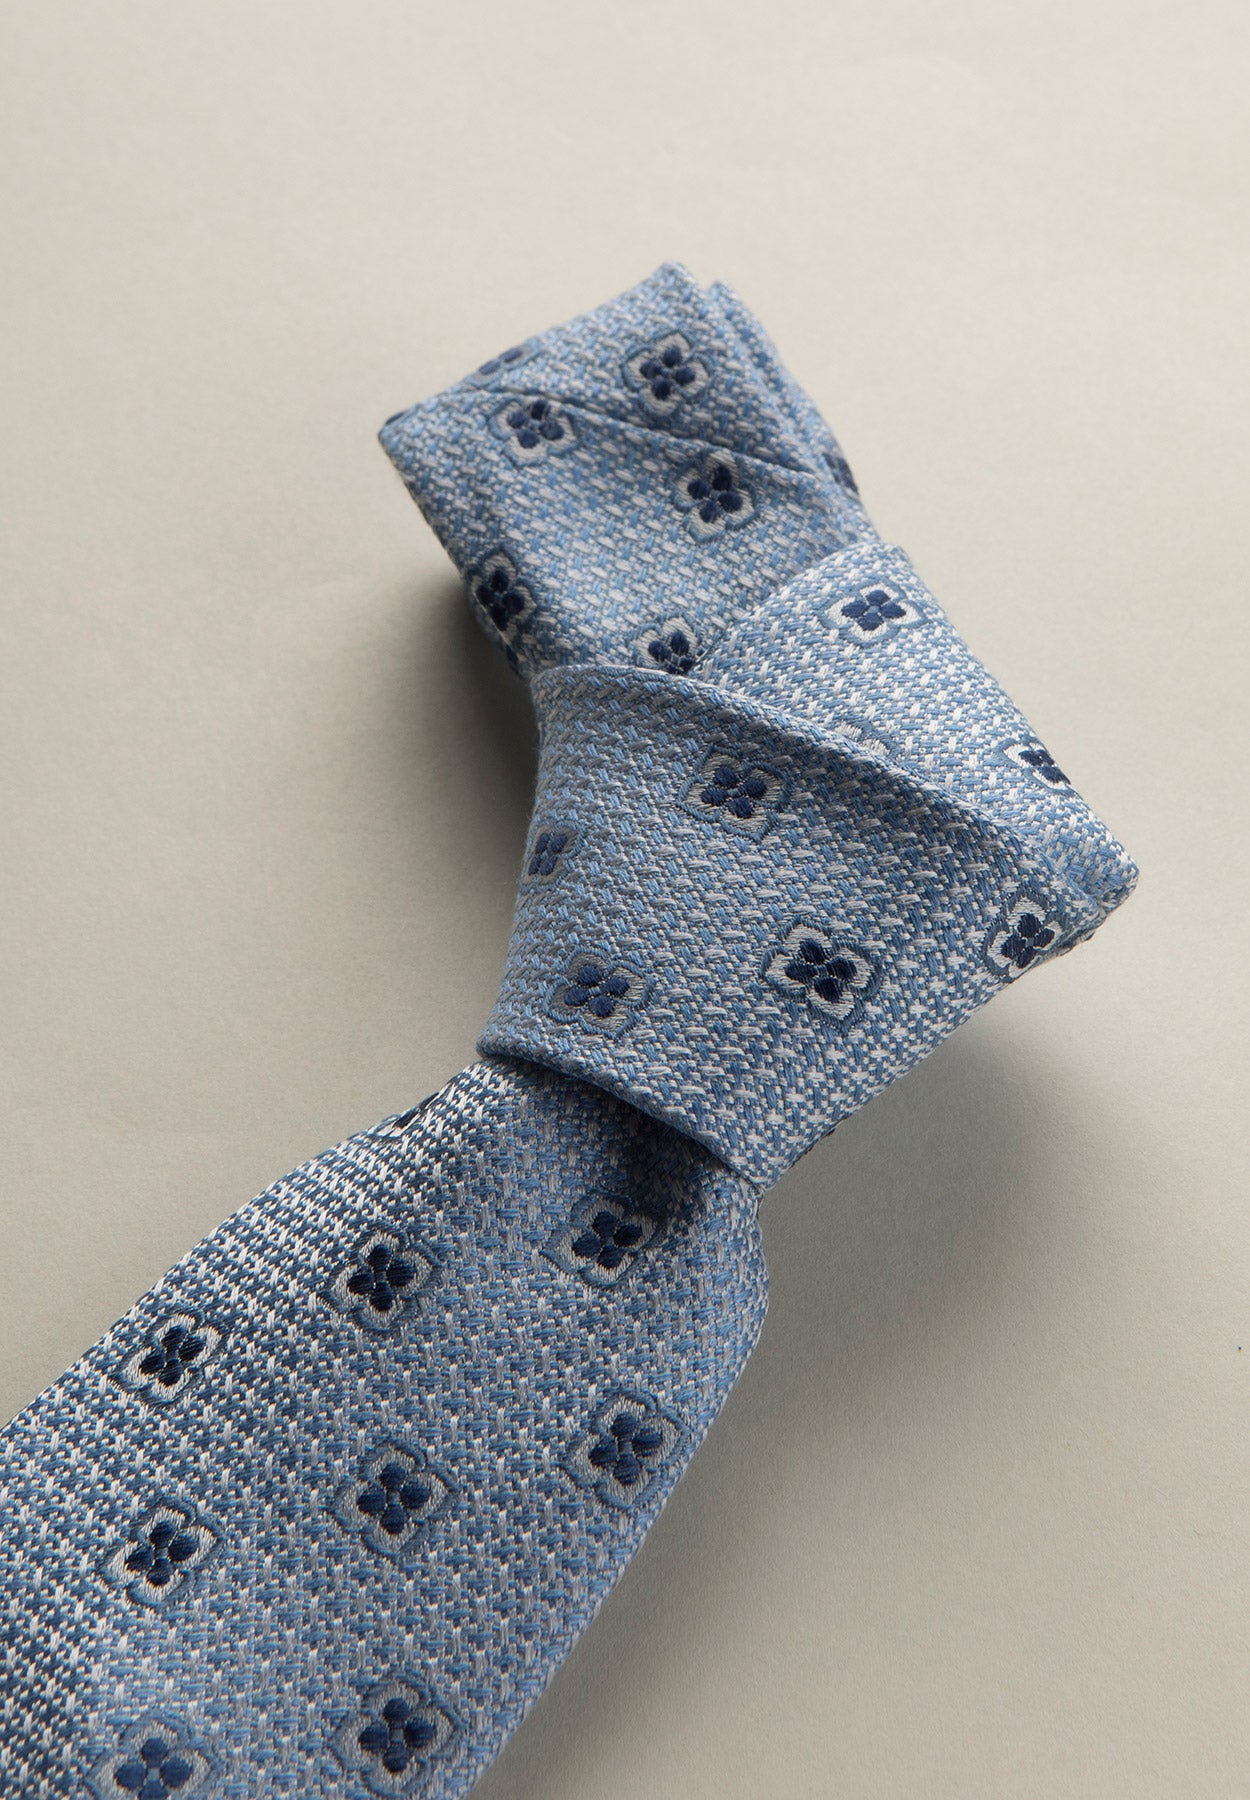 Cravatta azzurra armatura fantasia fiori seta cotone